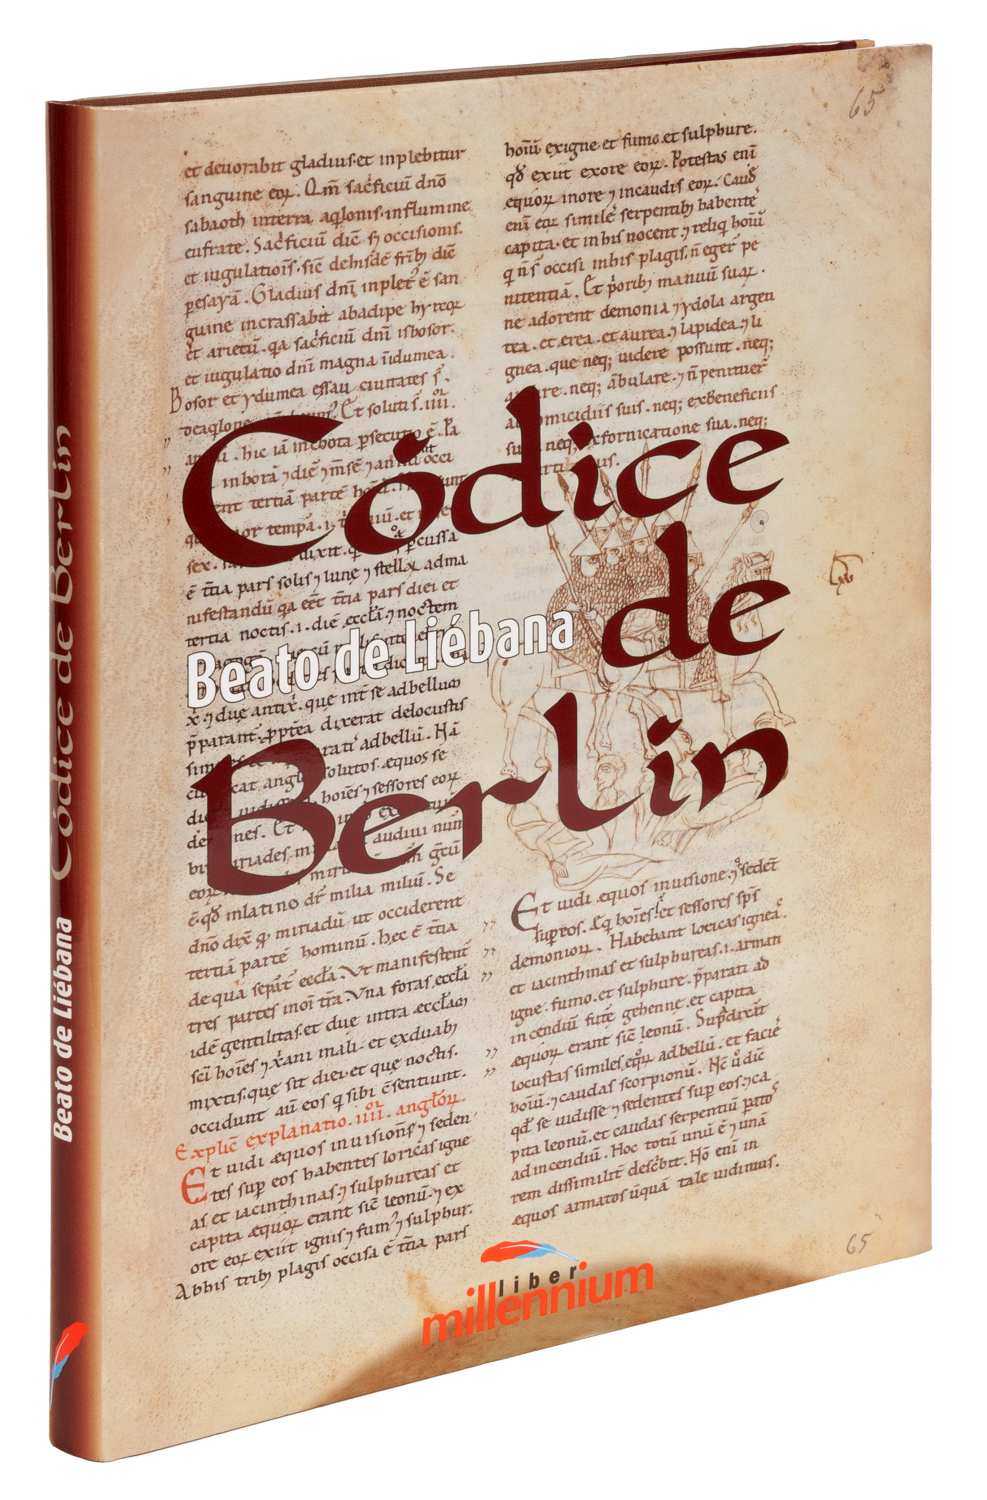 01 Codice de Berlin